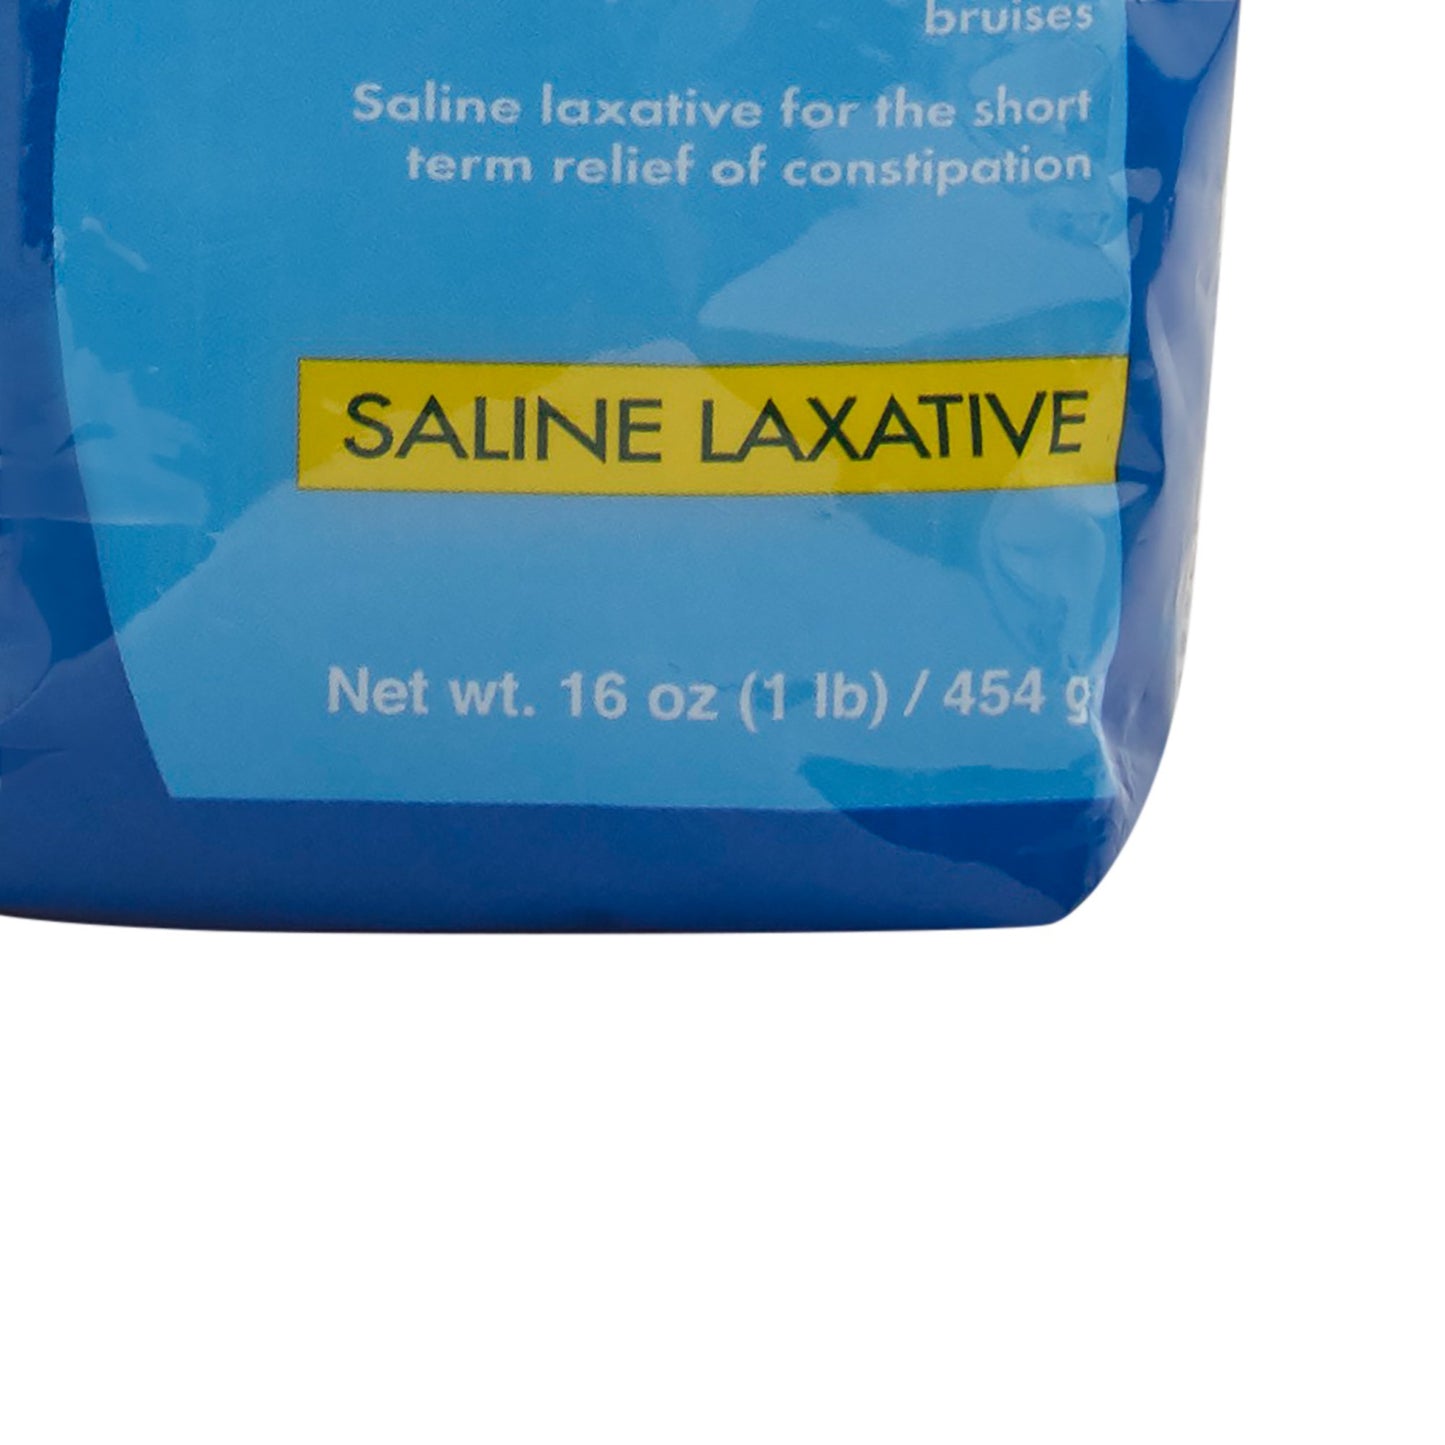 Sunmark® Magnesium Sulfate Epsom Salt, 1 lb. Pouch